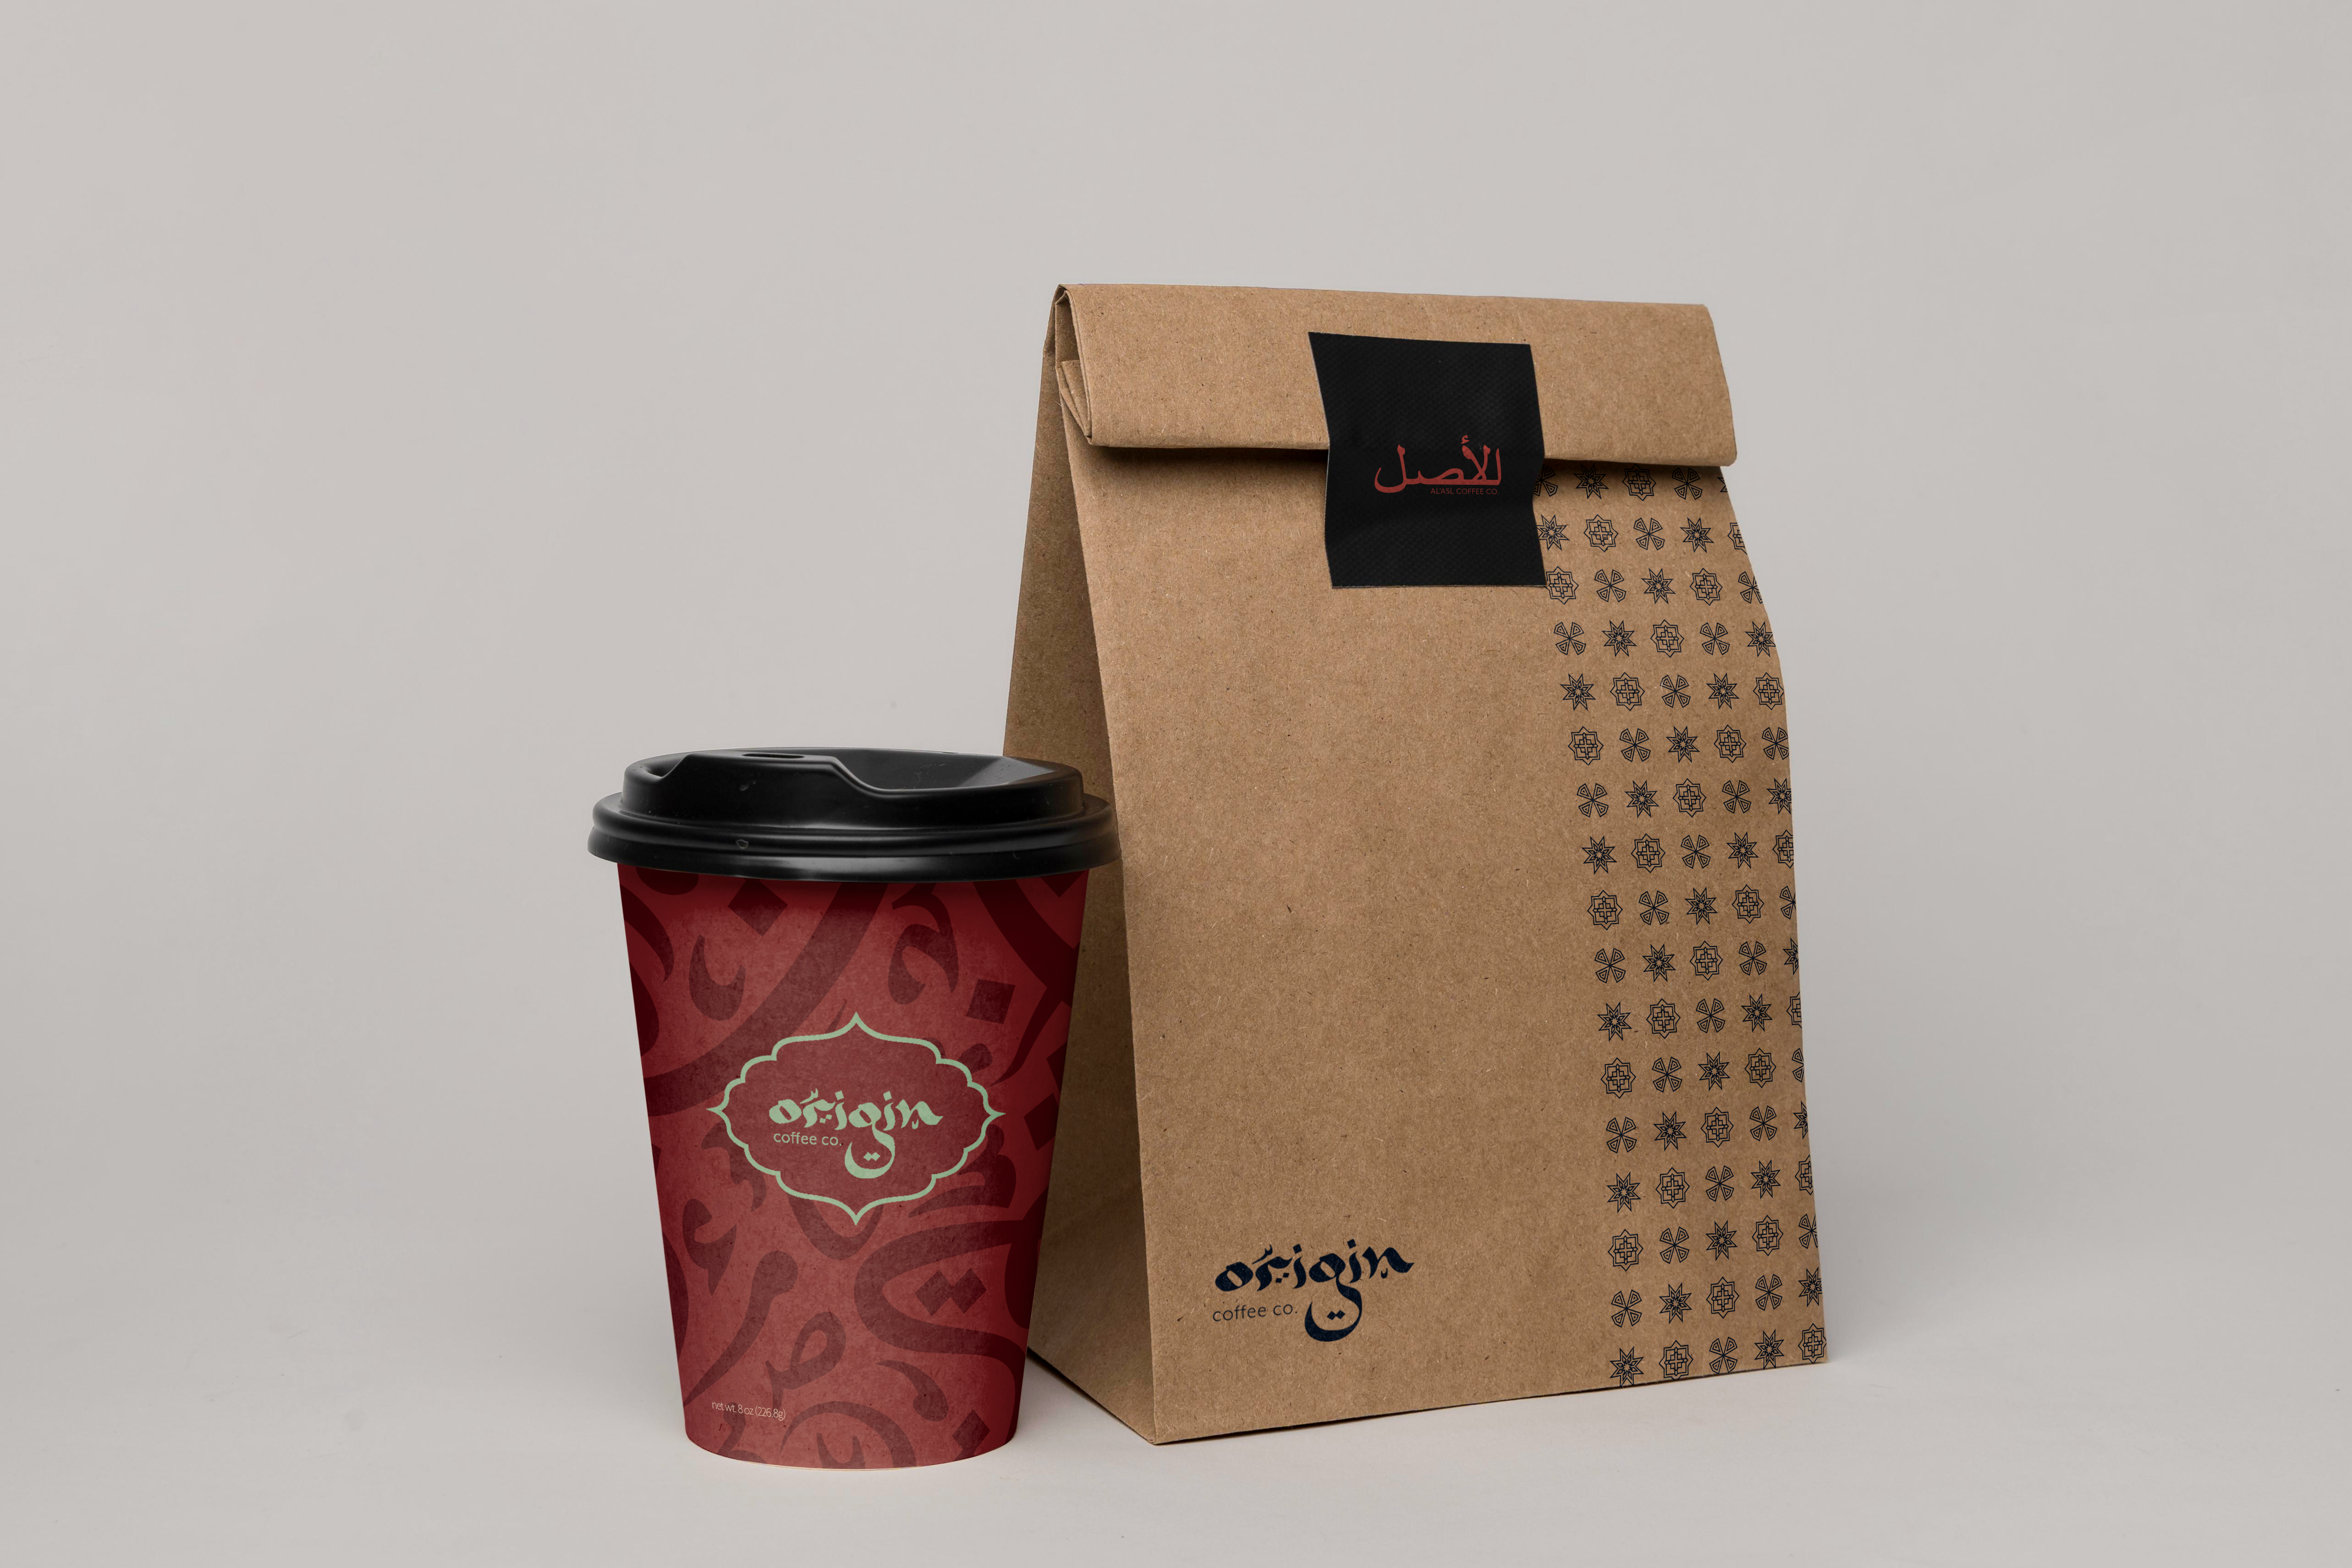 Origin coffee cup & bag